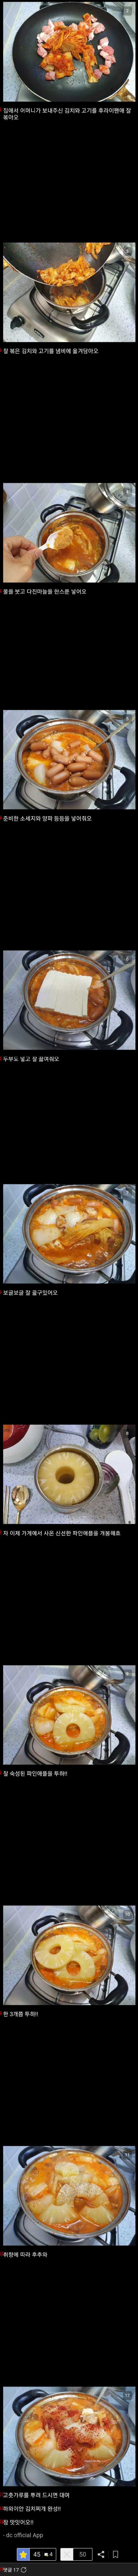 Kimchi stew that people like or dislike